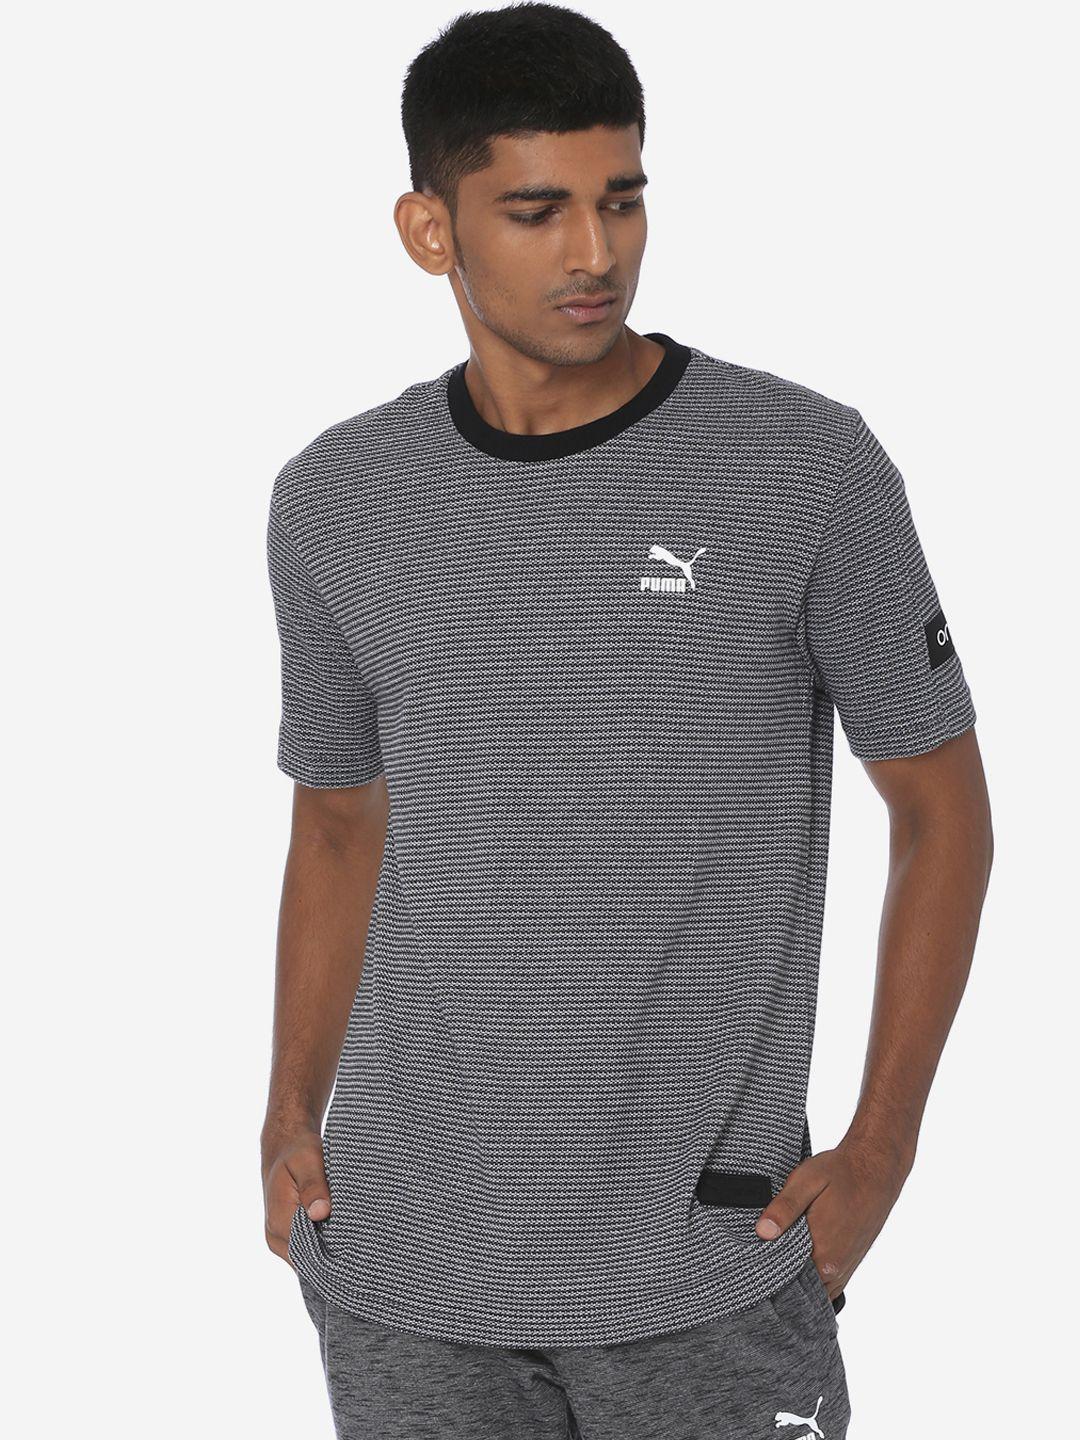 puma men grey striped round neck vk stylized tee sports t-shirt